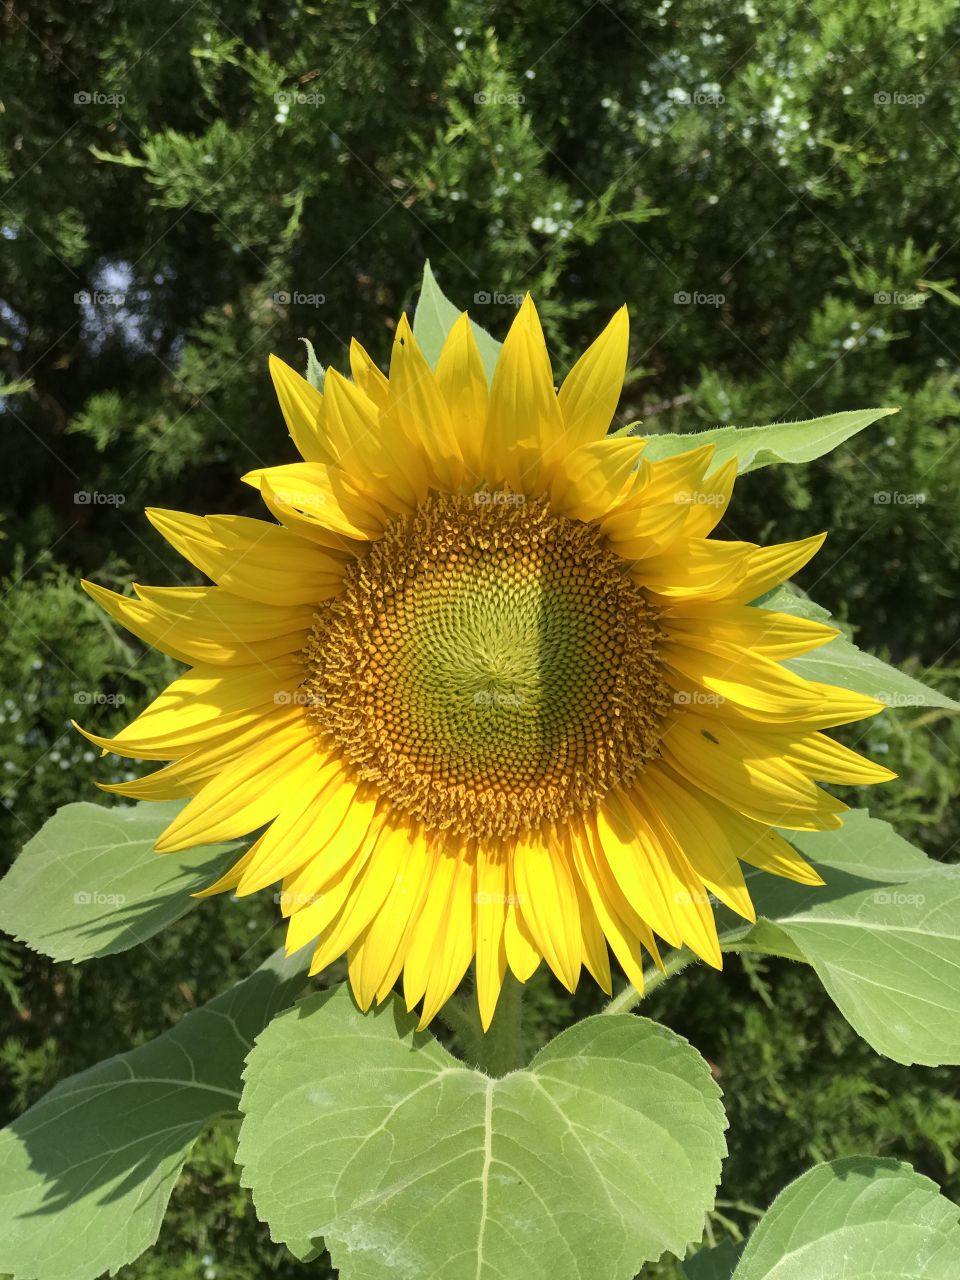 Happy Sunflower 